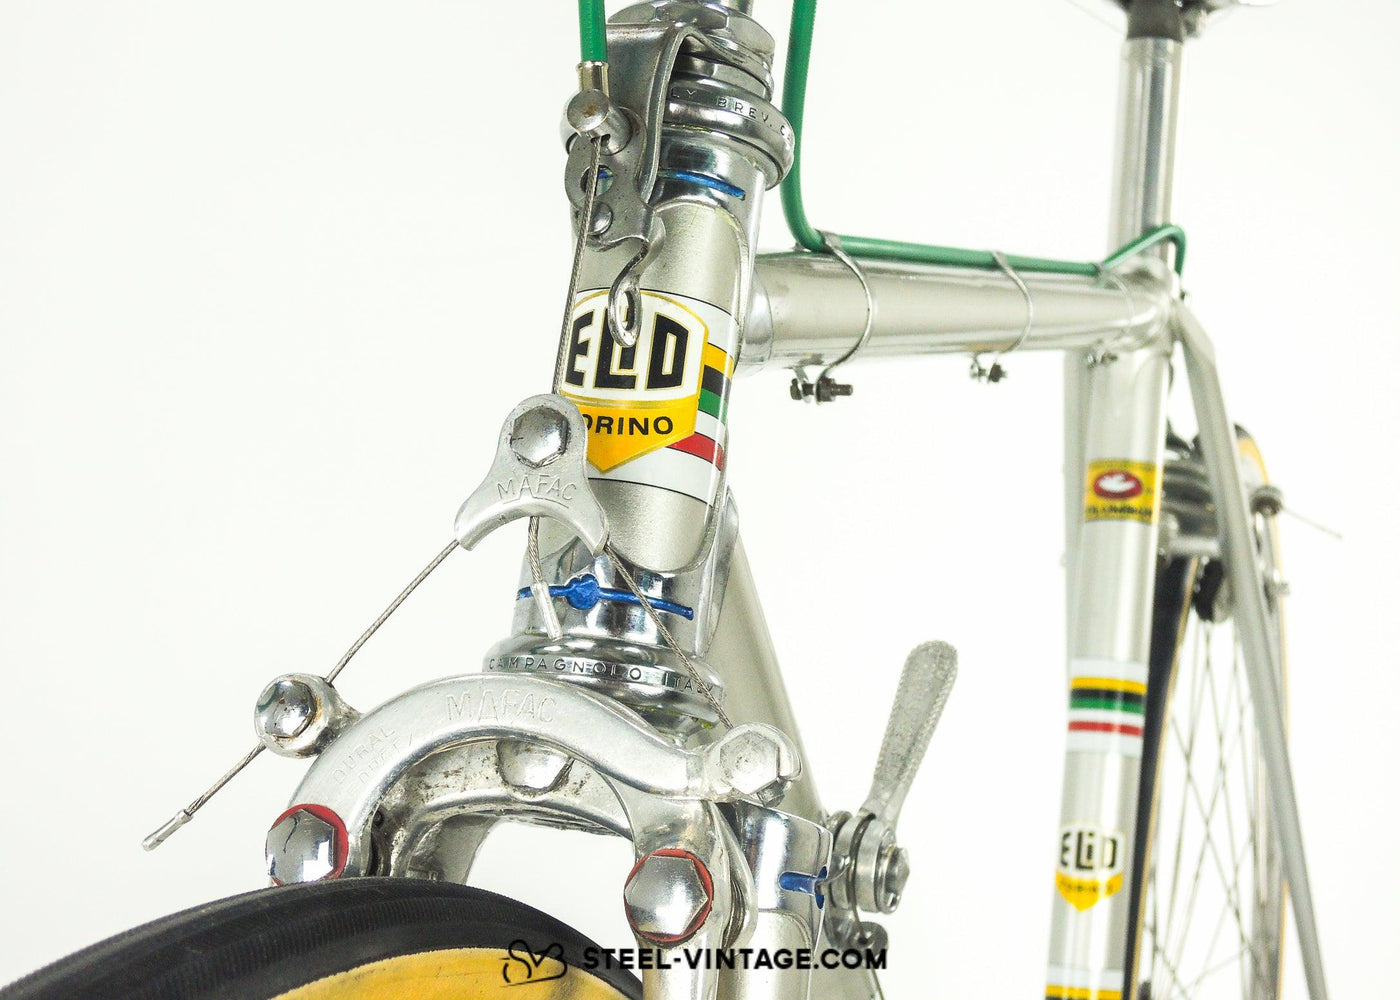 Elio Corsa Rare Road Bike 1960s - Steel Vintage Bikes